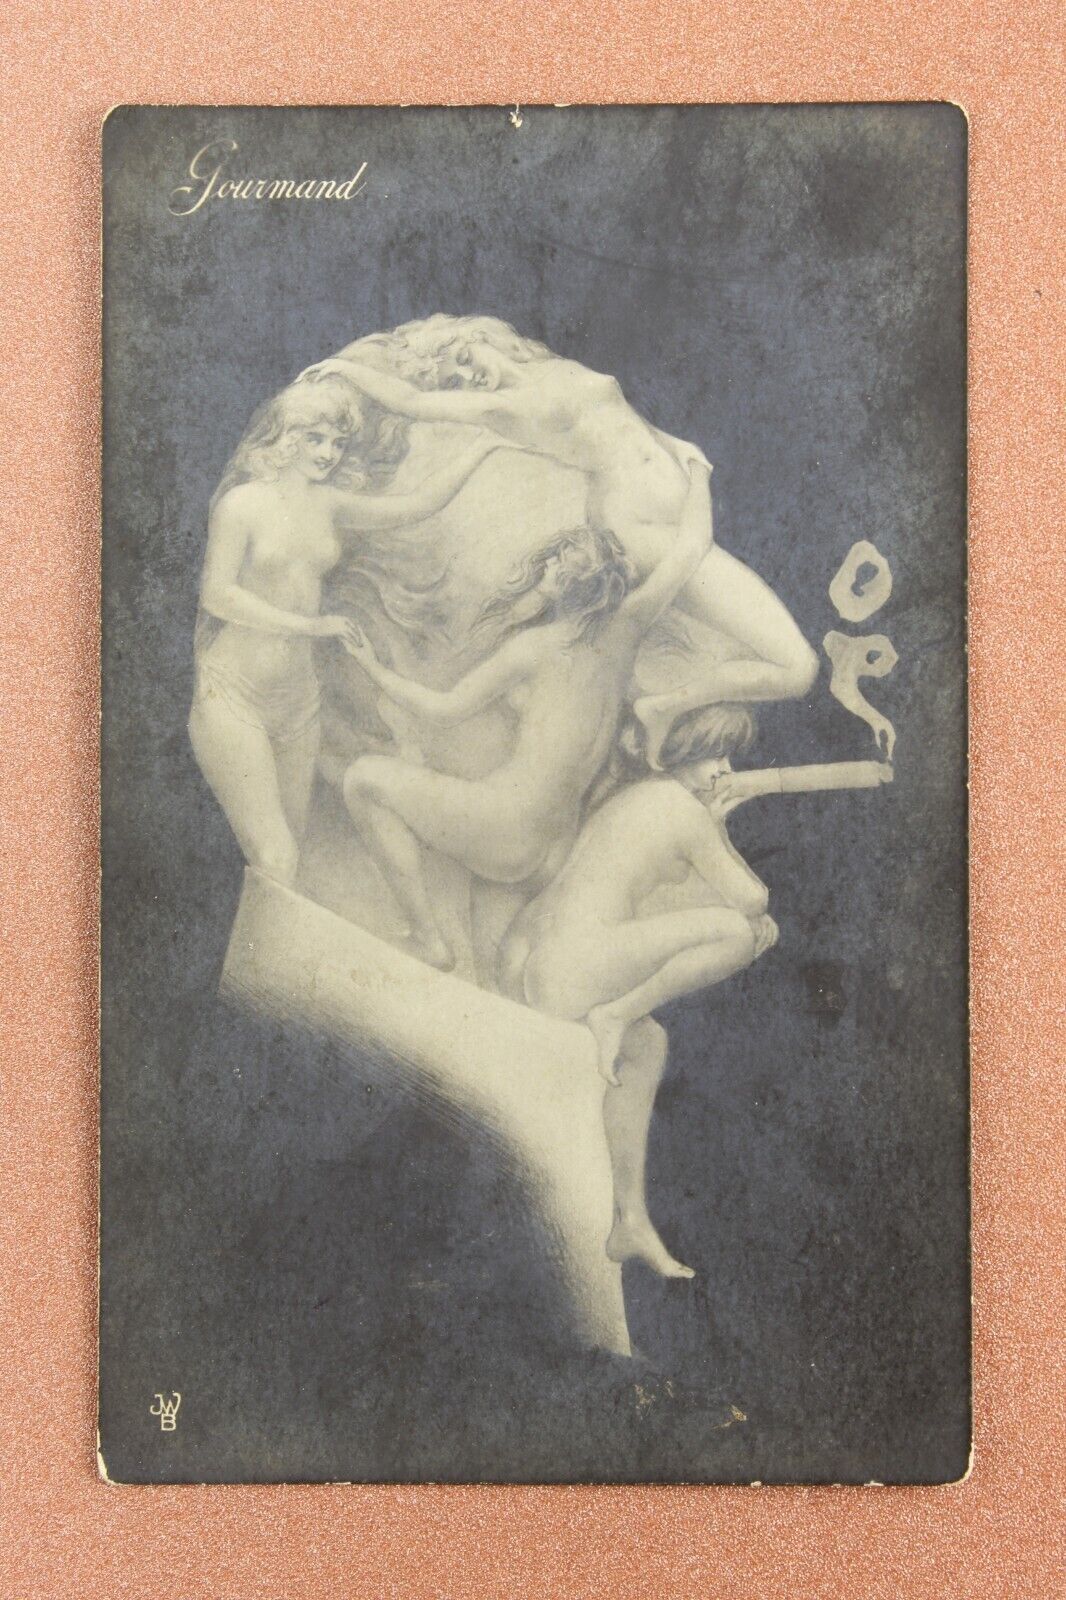 FOURMAND. Metamorphic Head man - nude nymphs. Cigarette. Antique postcard 1909s